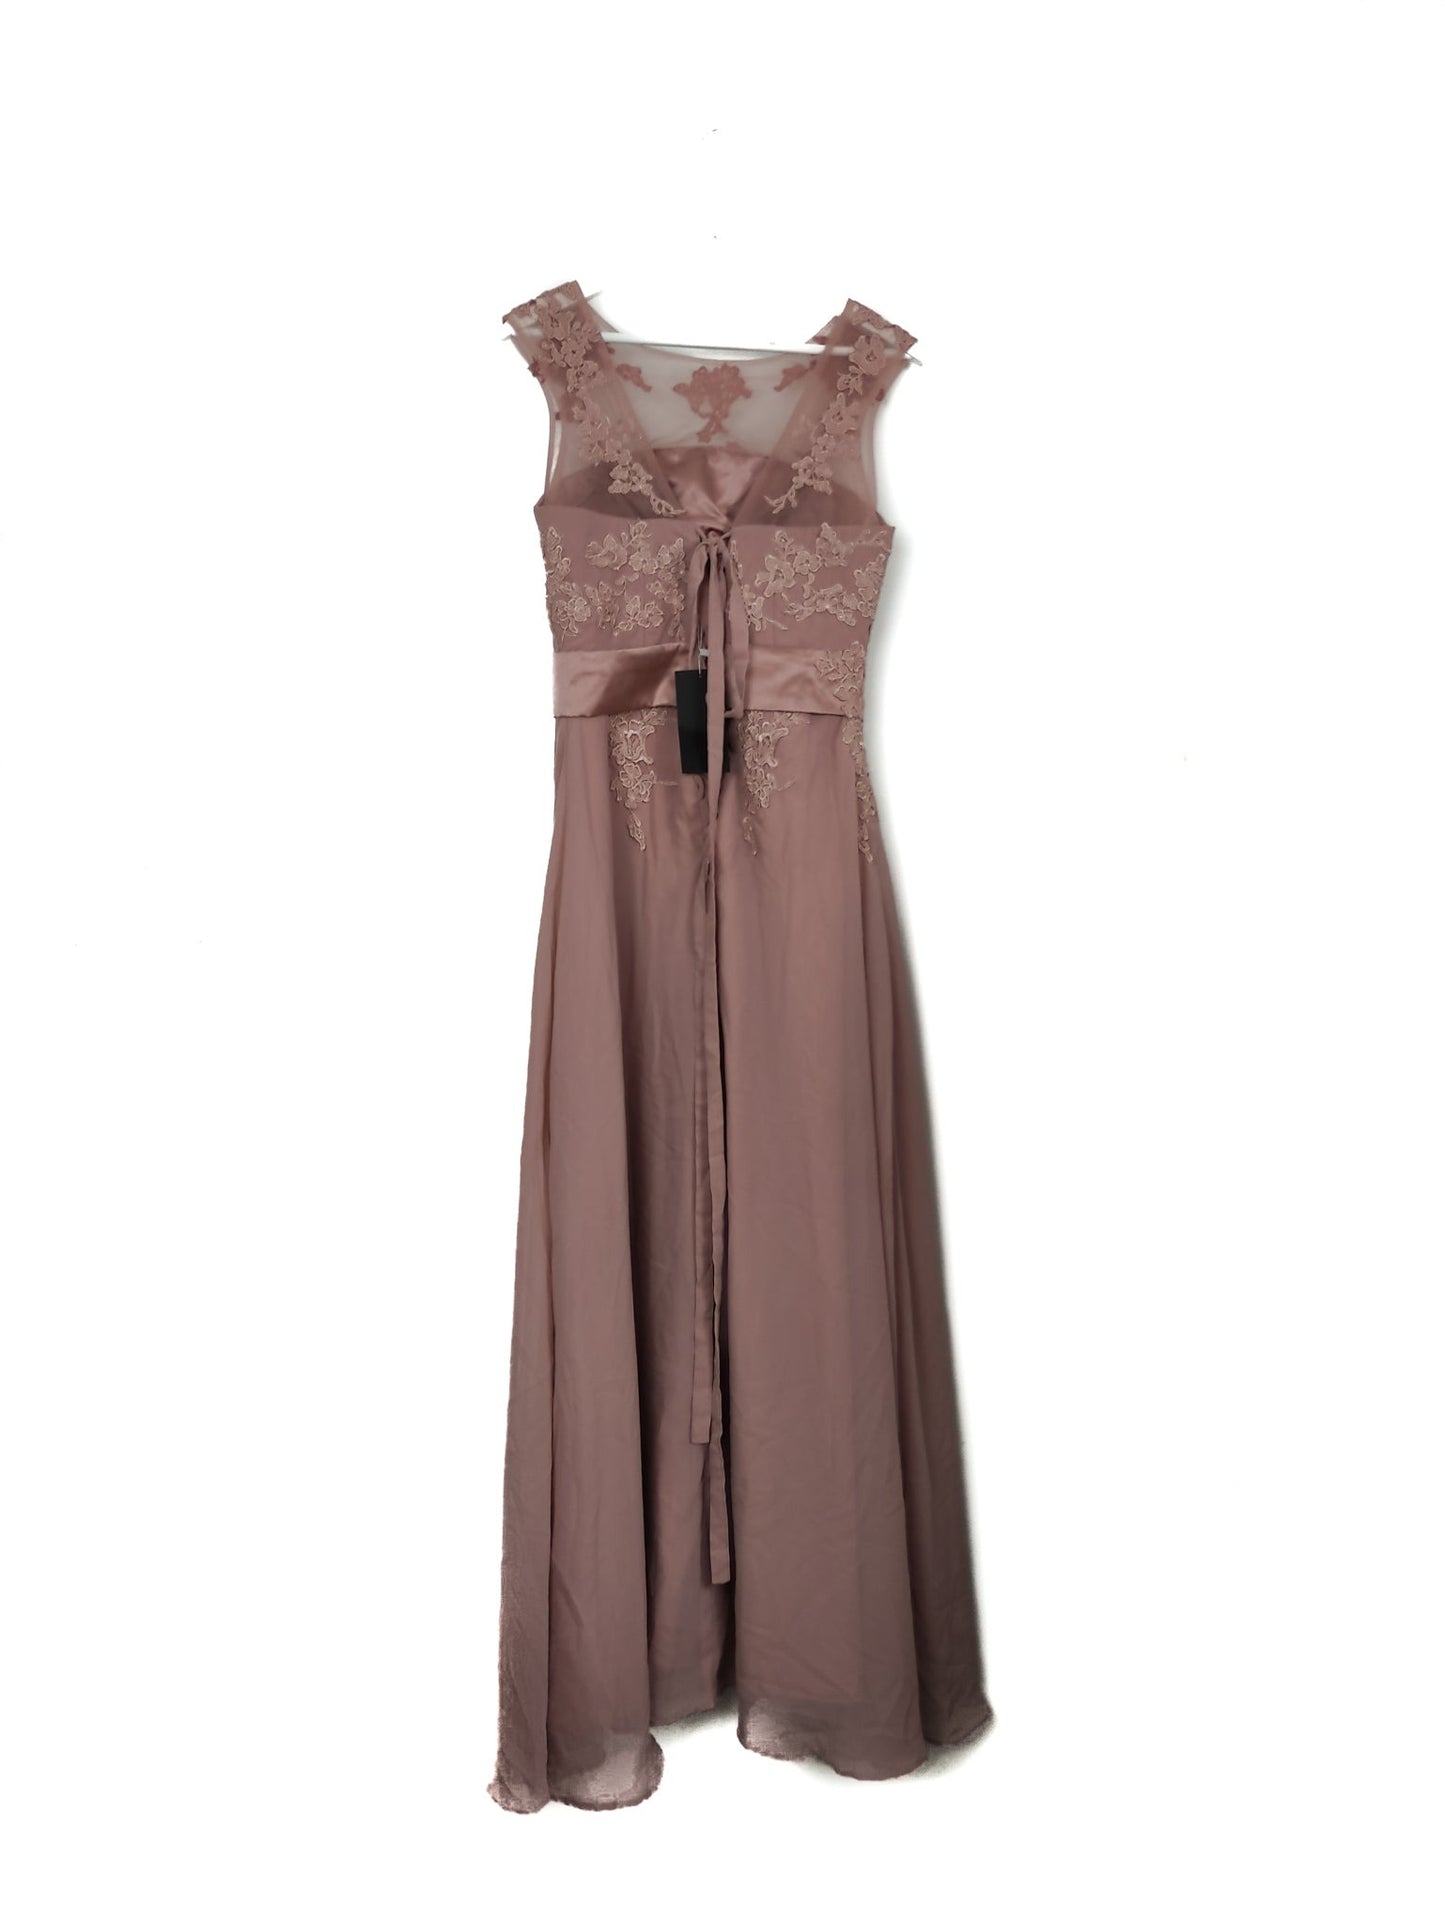 Stock, Maxi Βραδινό Φόρεμα AMY' S BRIDAL σε Ανοιχτό Χρώμα Σάπιου Μήλου (Small)